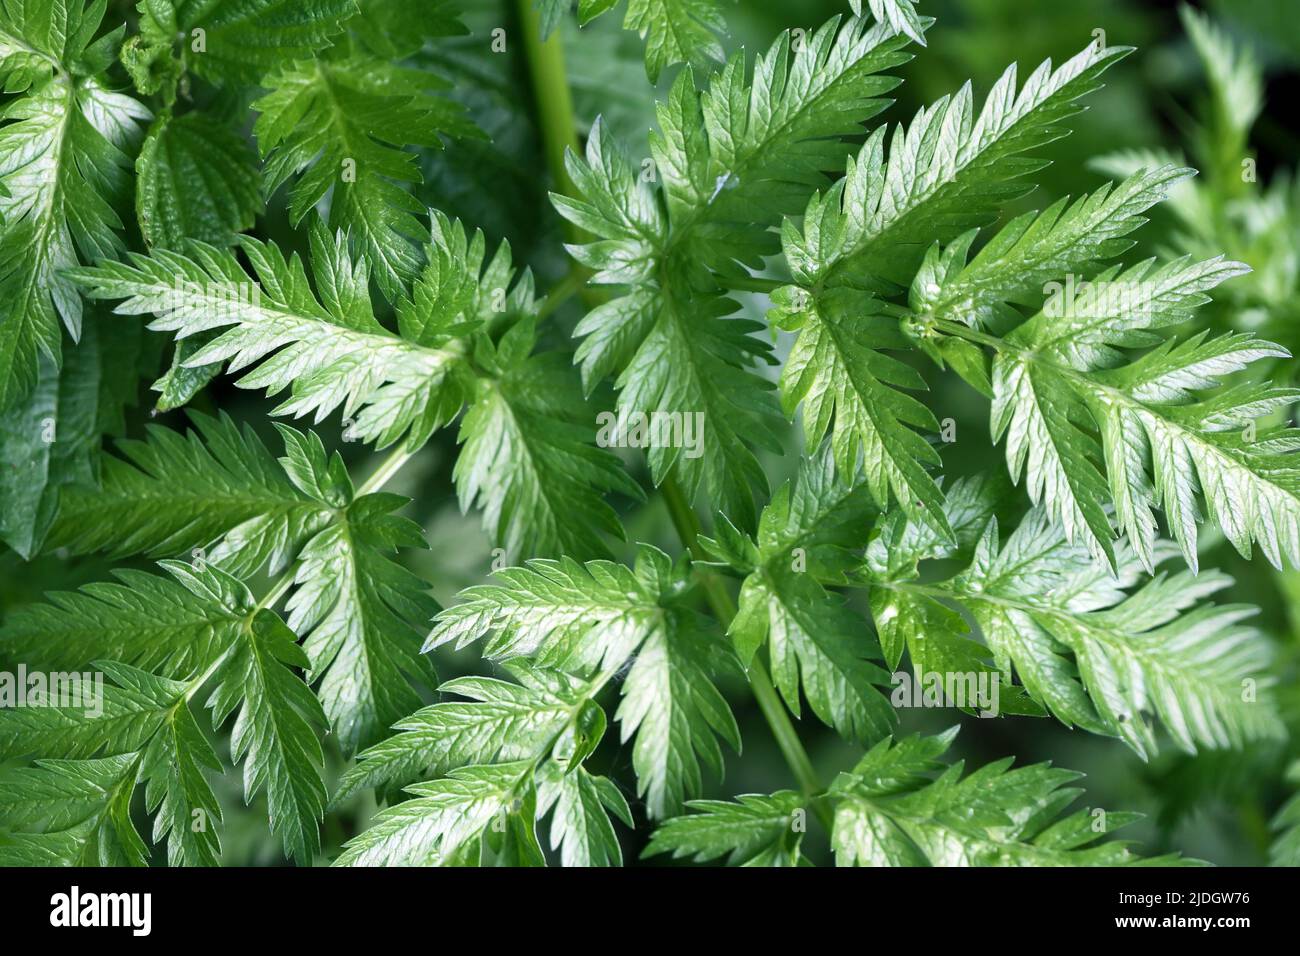 Primer plano de fondo de hojas verdes frescas de verano Foto de stock